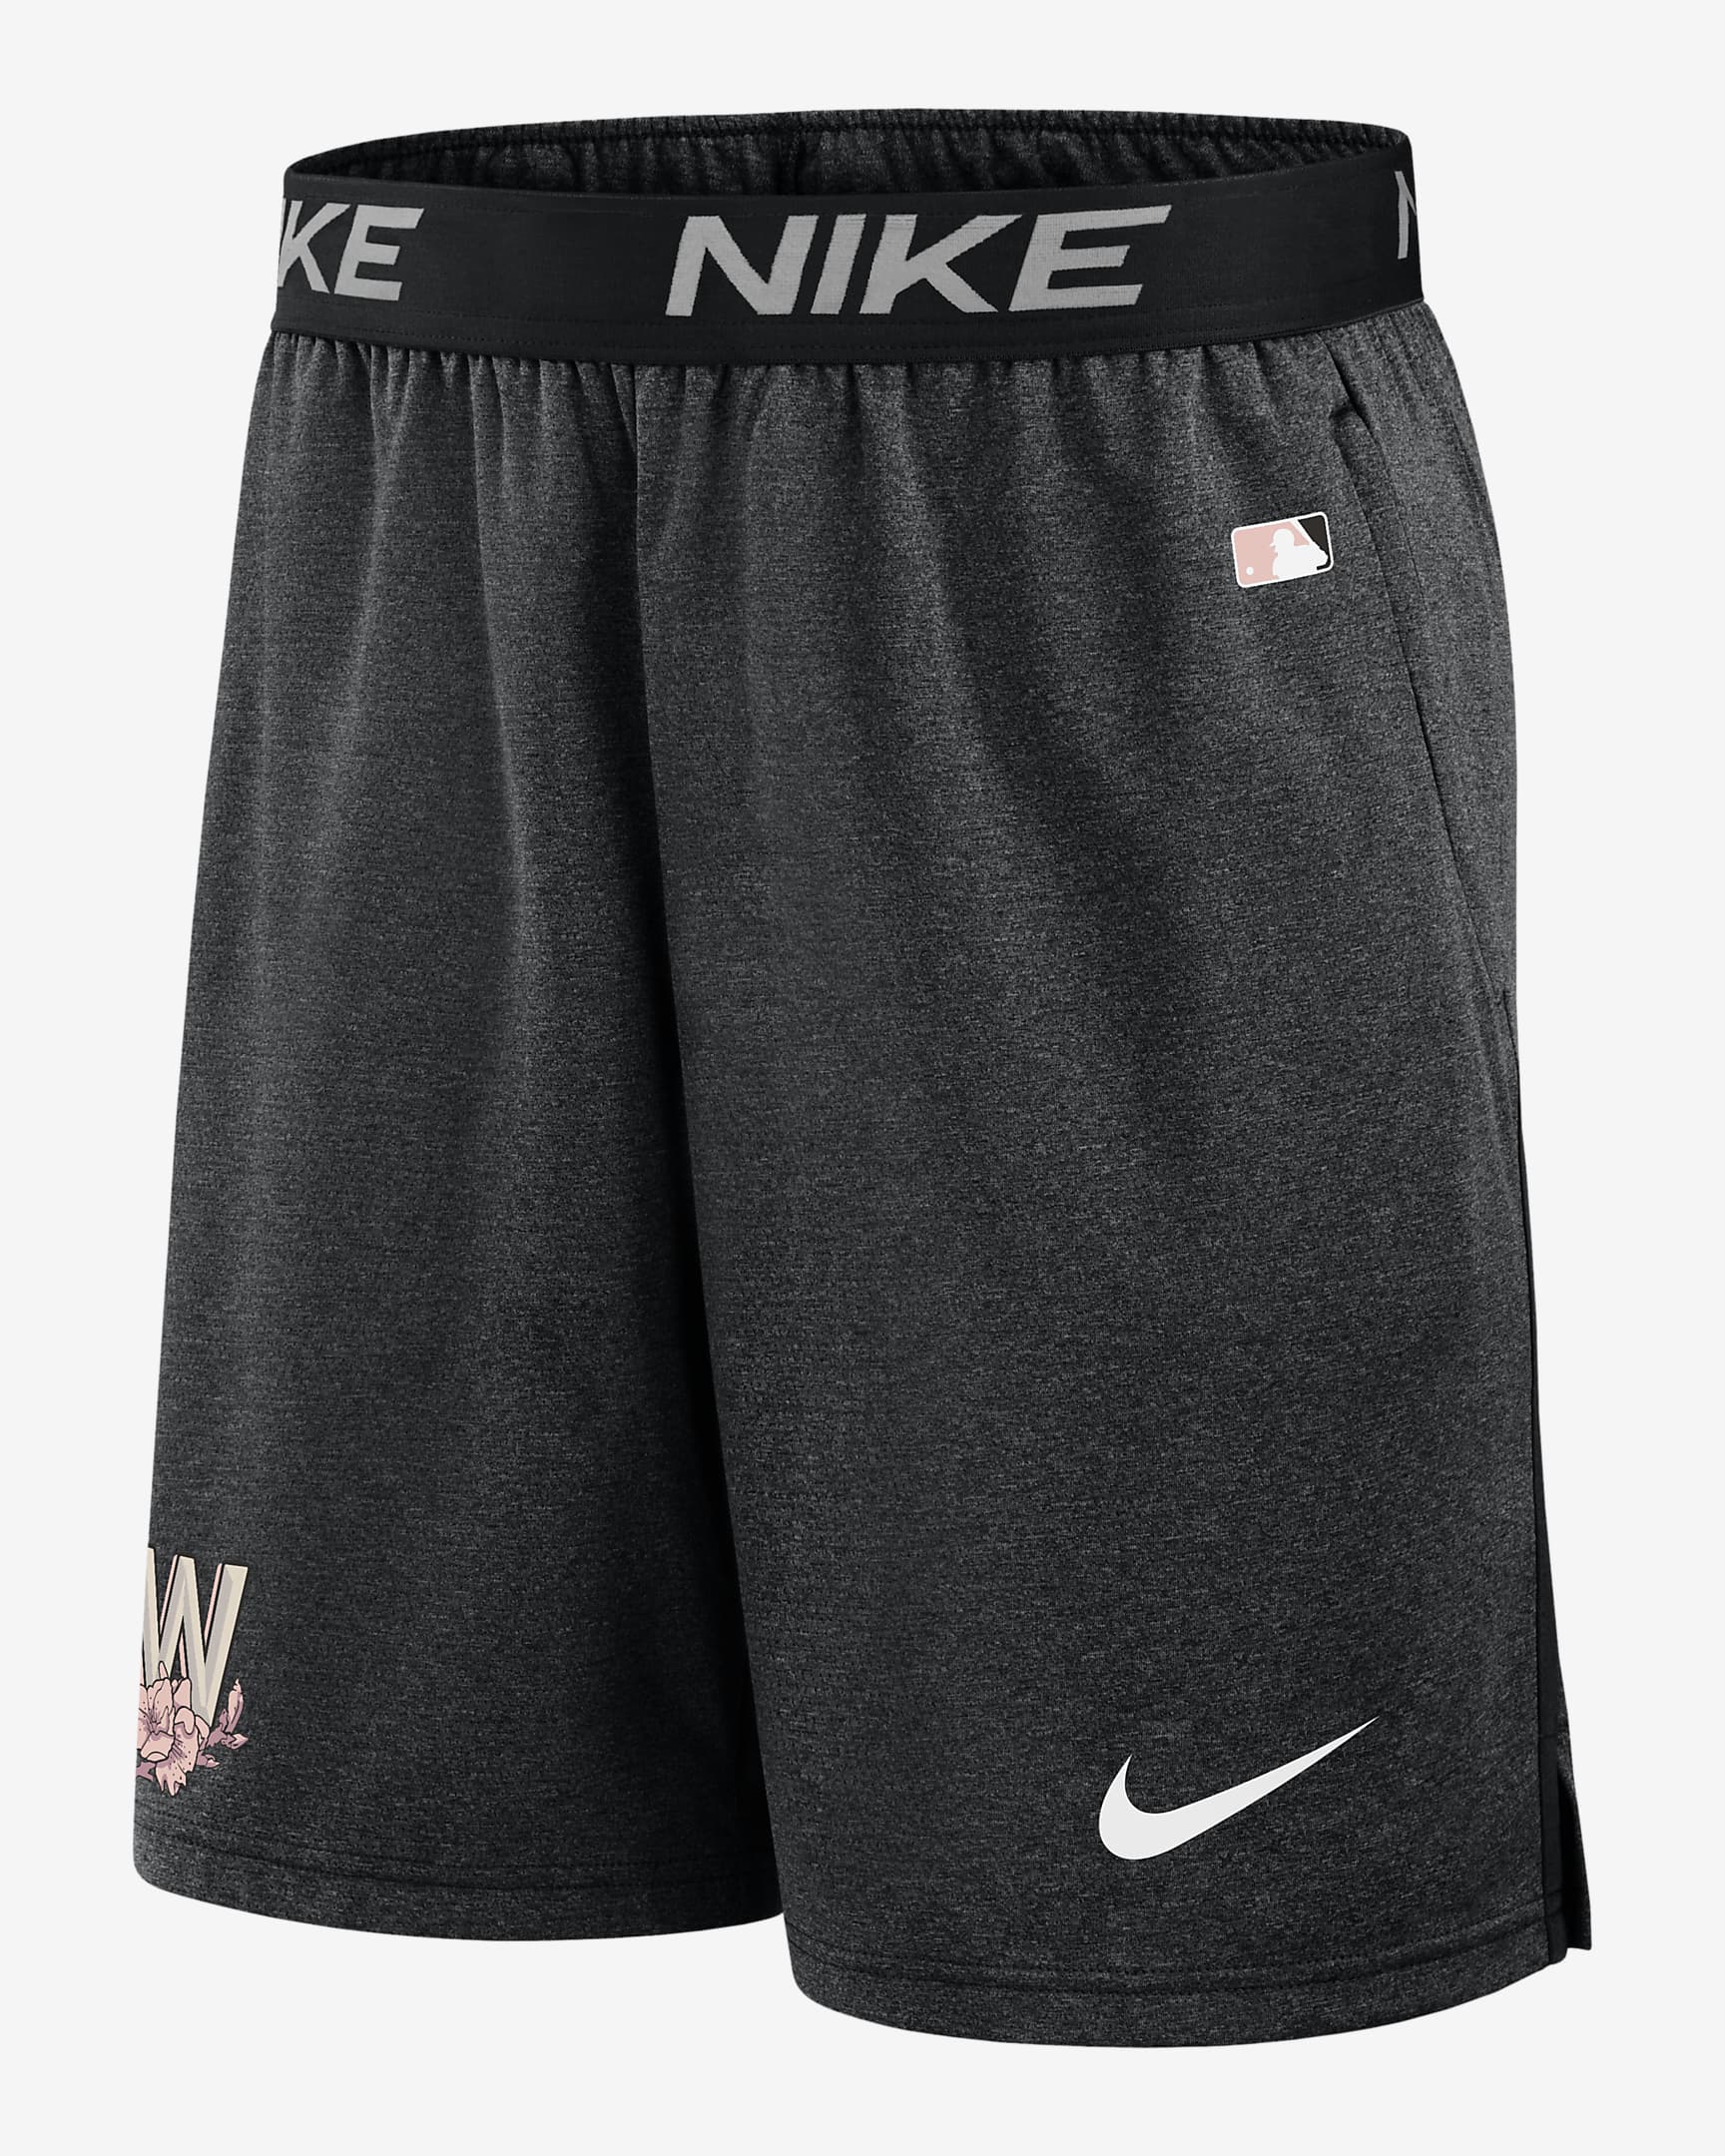 Washington Nationals City Connect Practice Men's Nike Dri-FIT MLB Shorts - Black